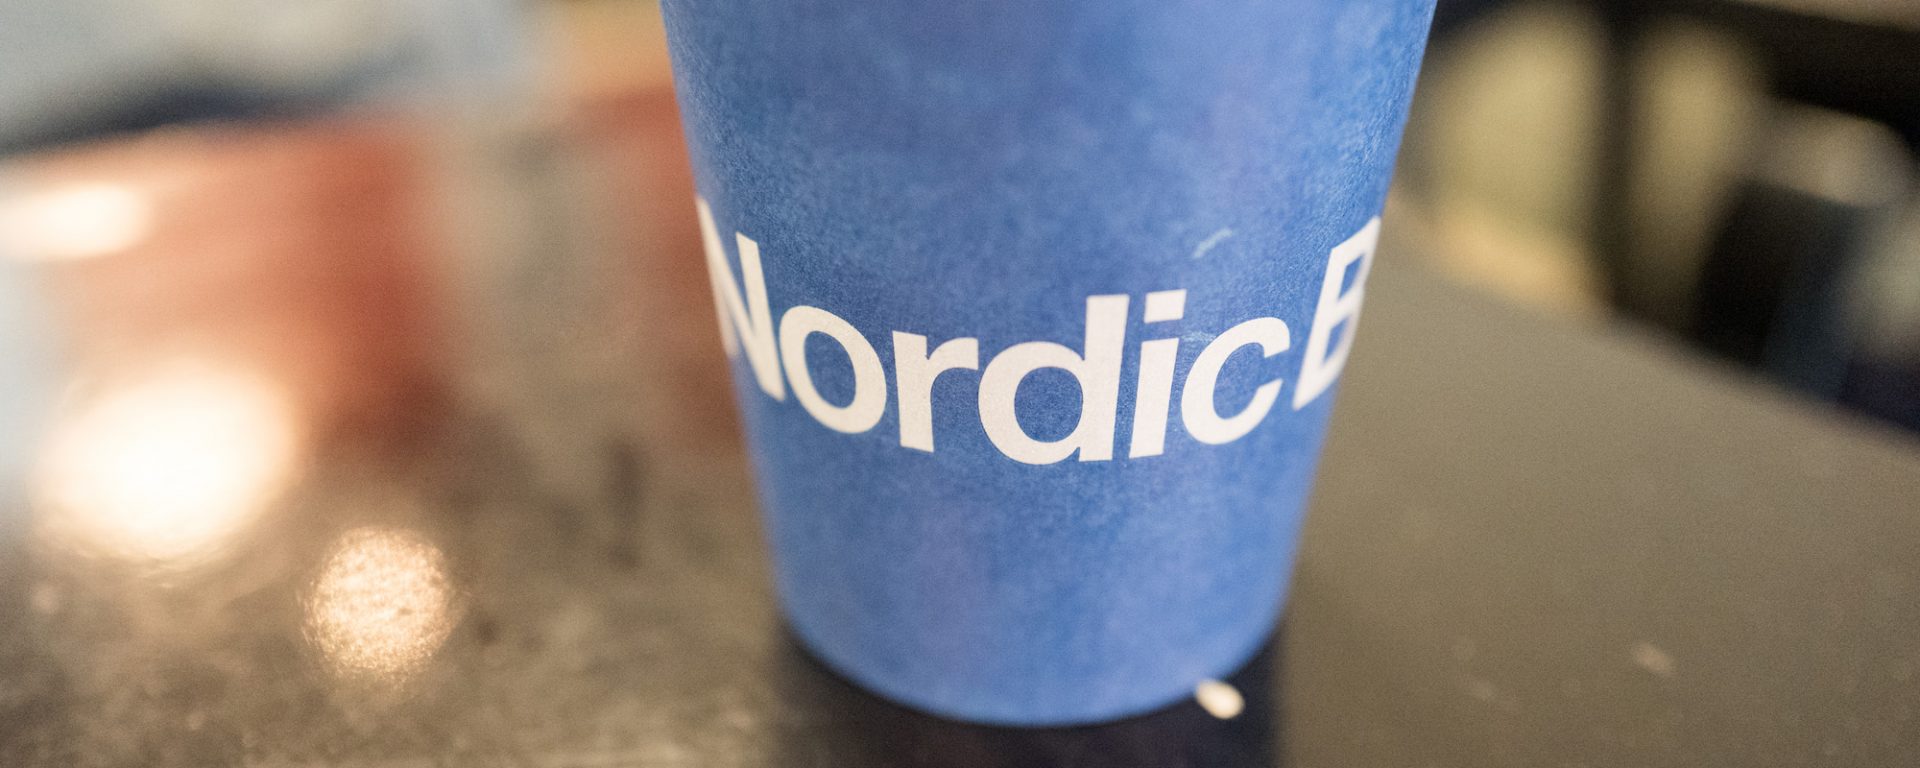 Nordic Bakery London logo